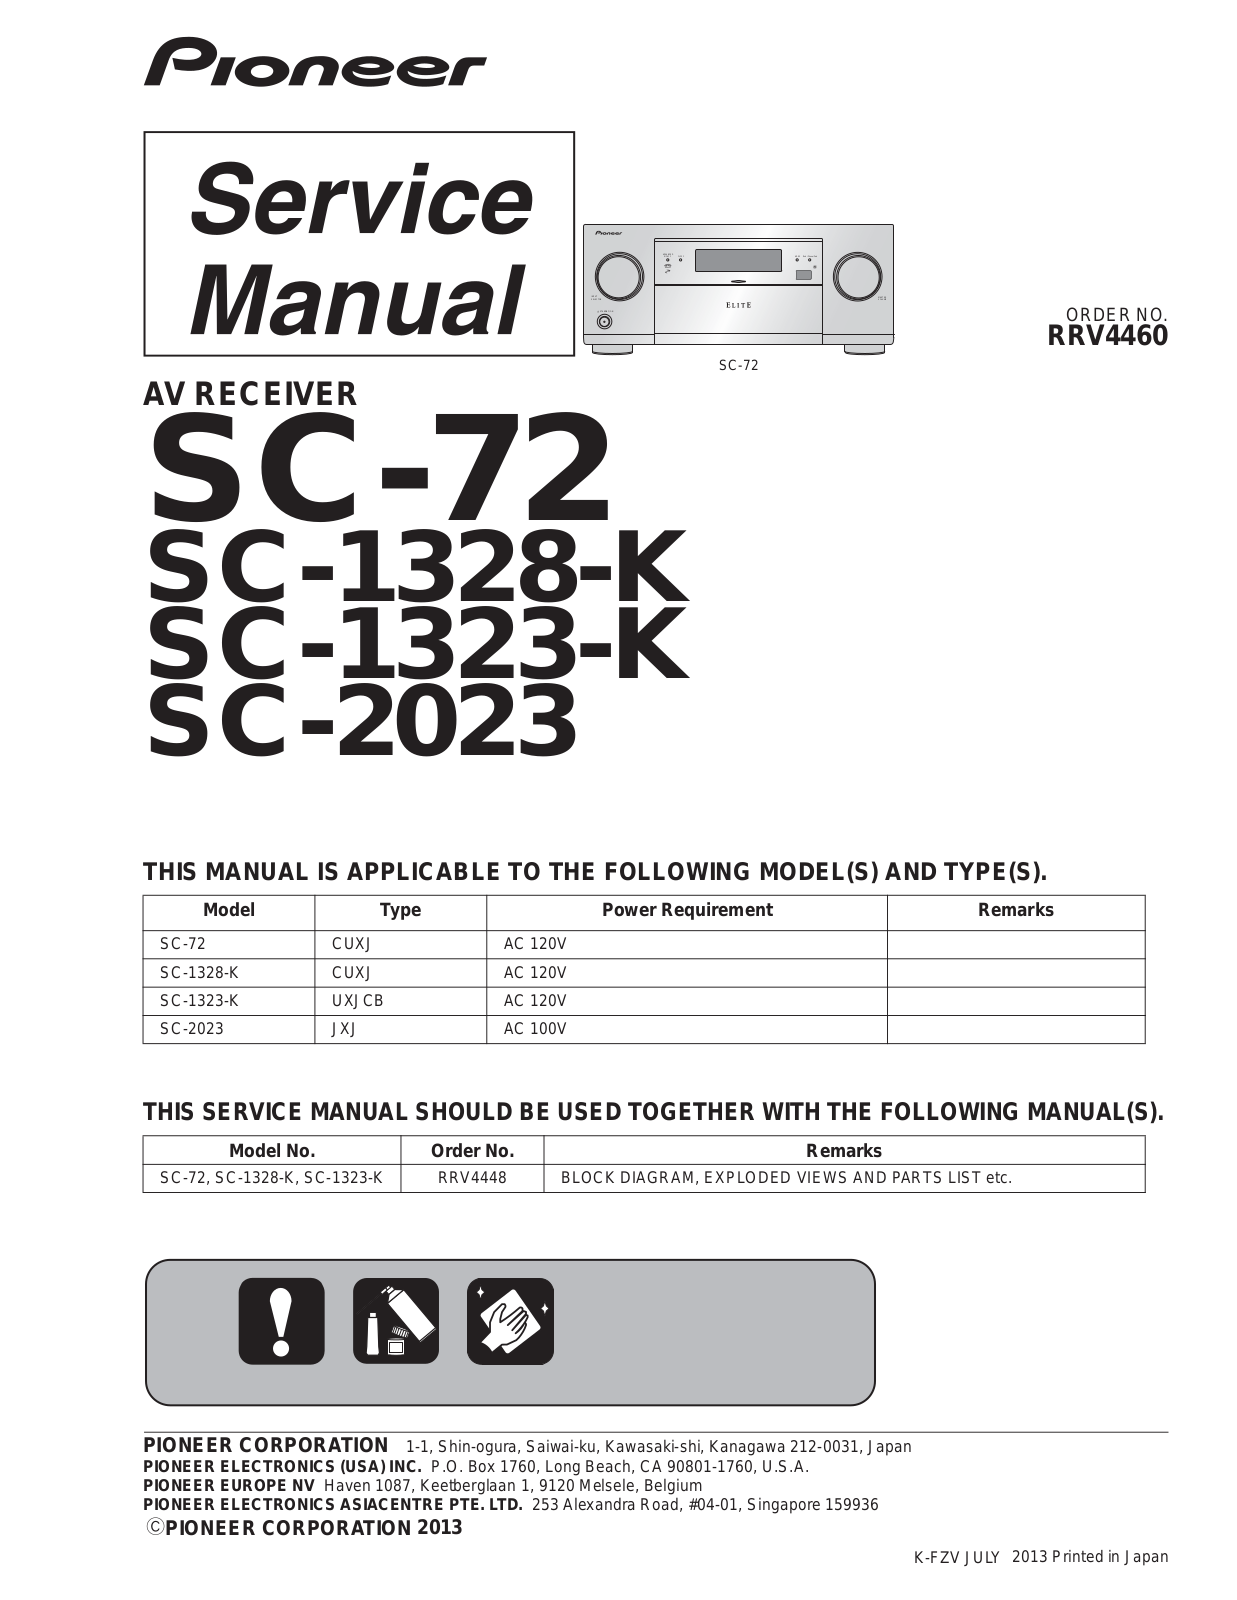 Pioneer SC-72, SC-1328, SC-1323, SC-2023 Service manual